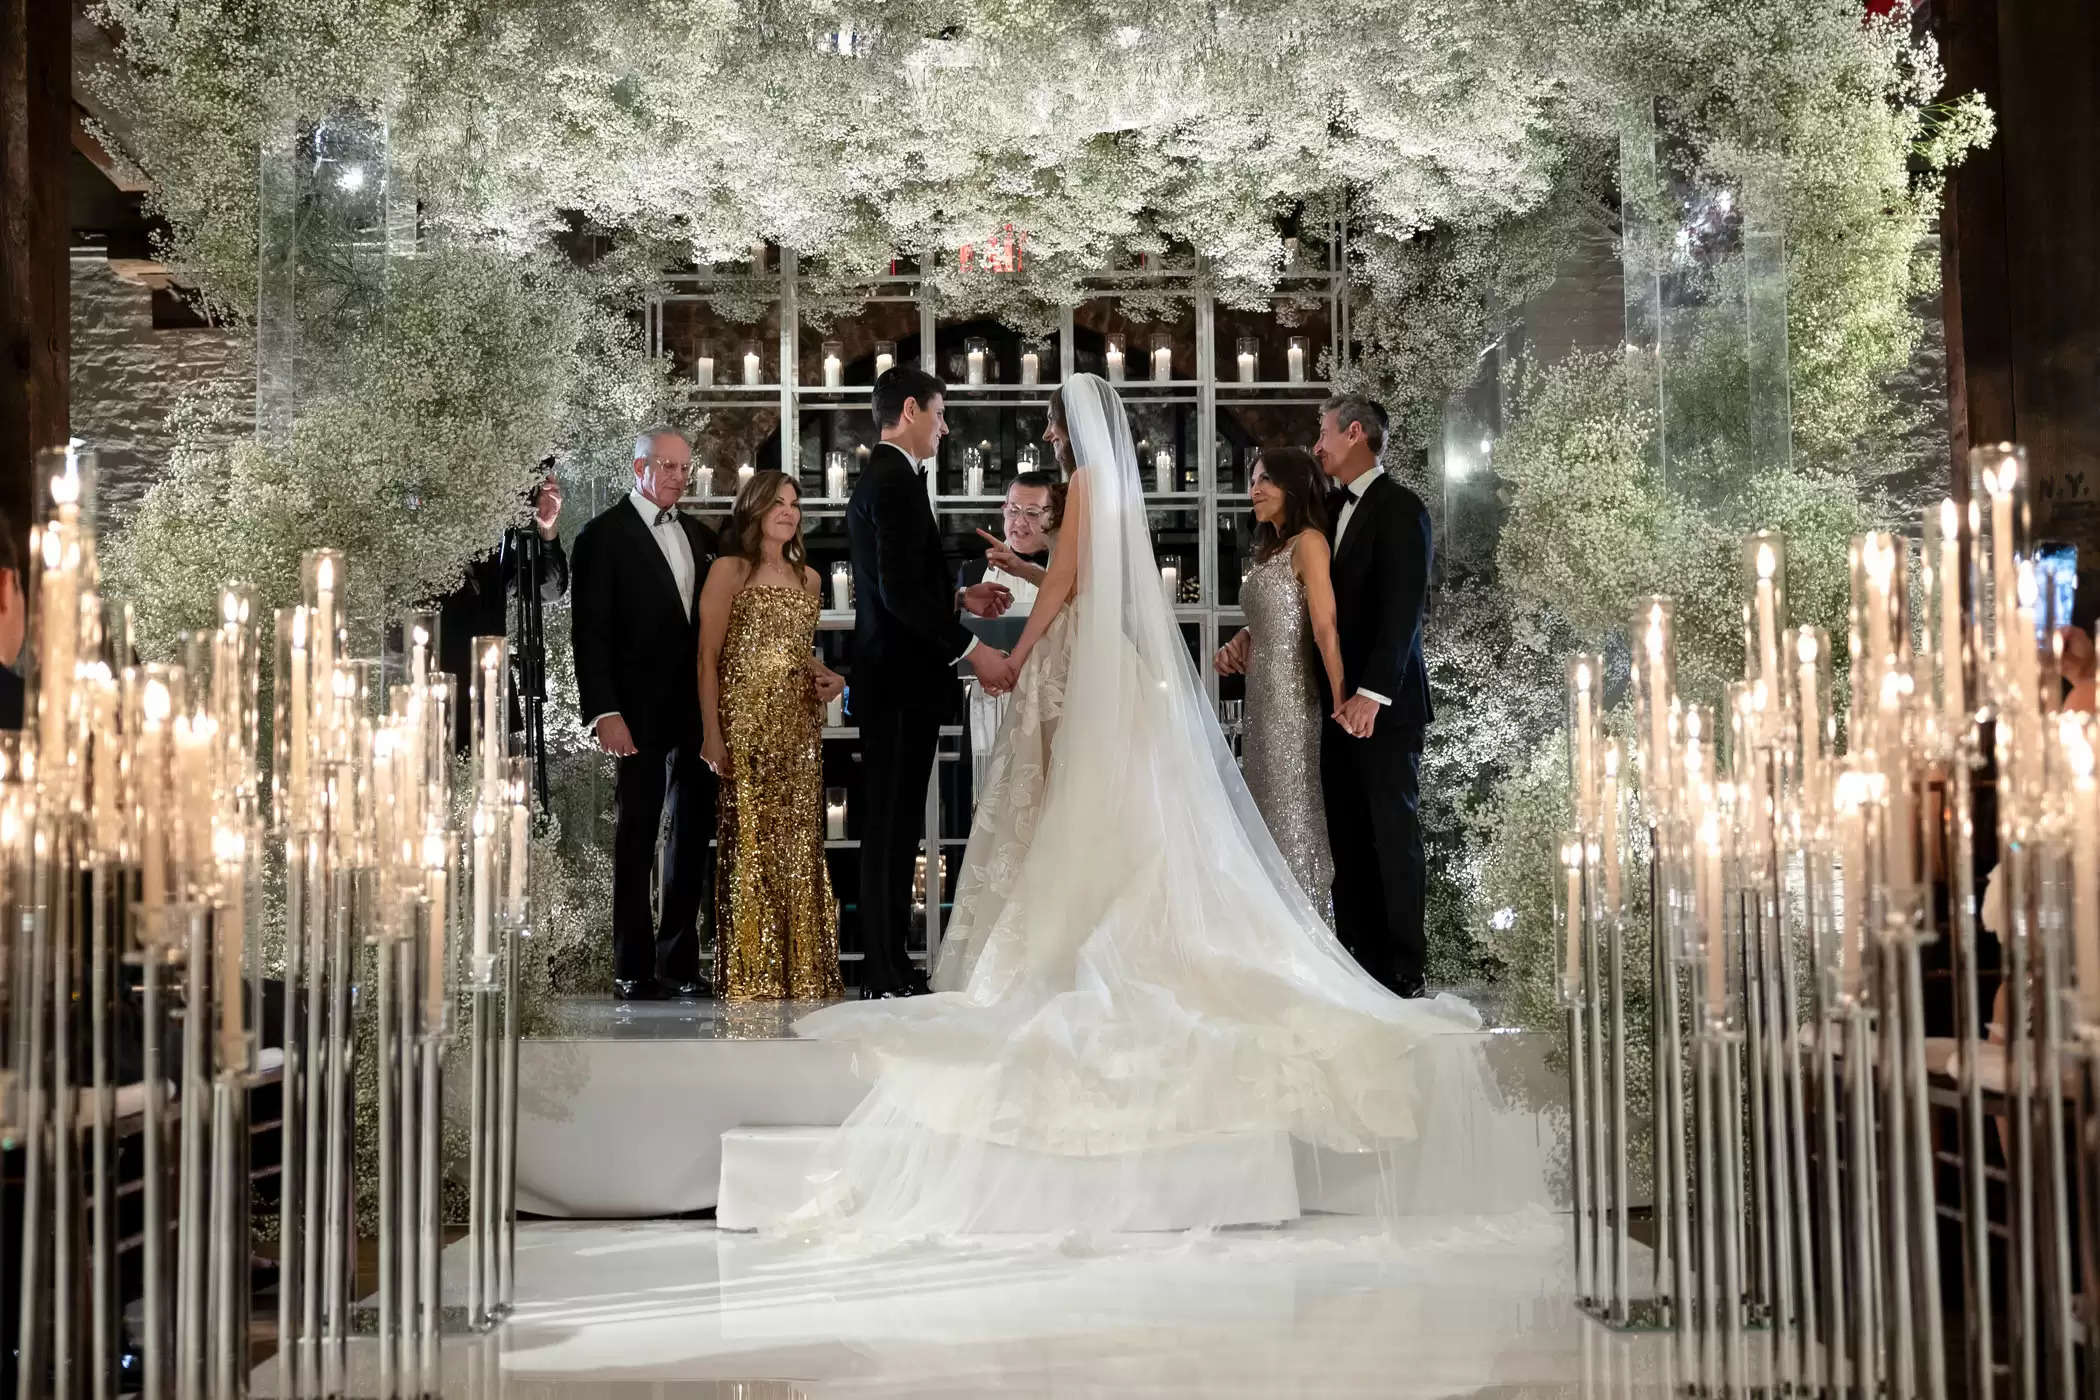 This Candlelit Winter Wedding ceremony in Brooklyn Was an Elegant Child’s Breath Dream